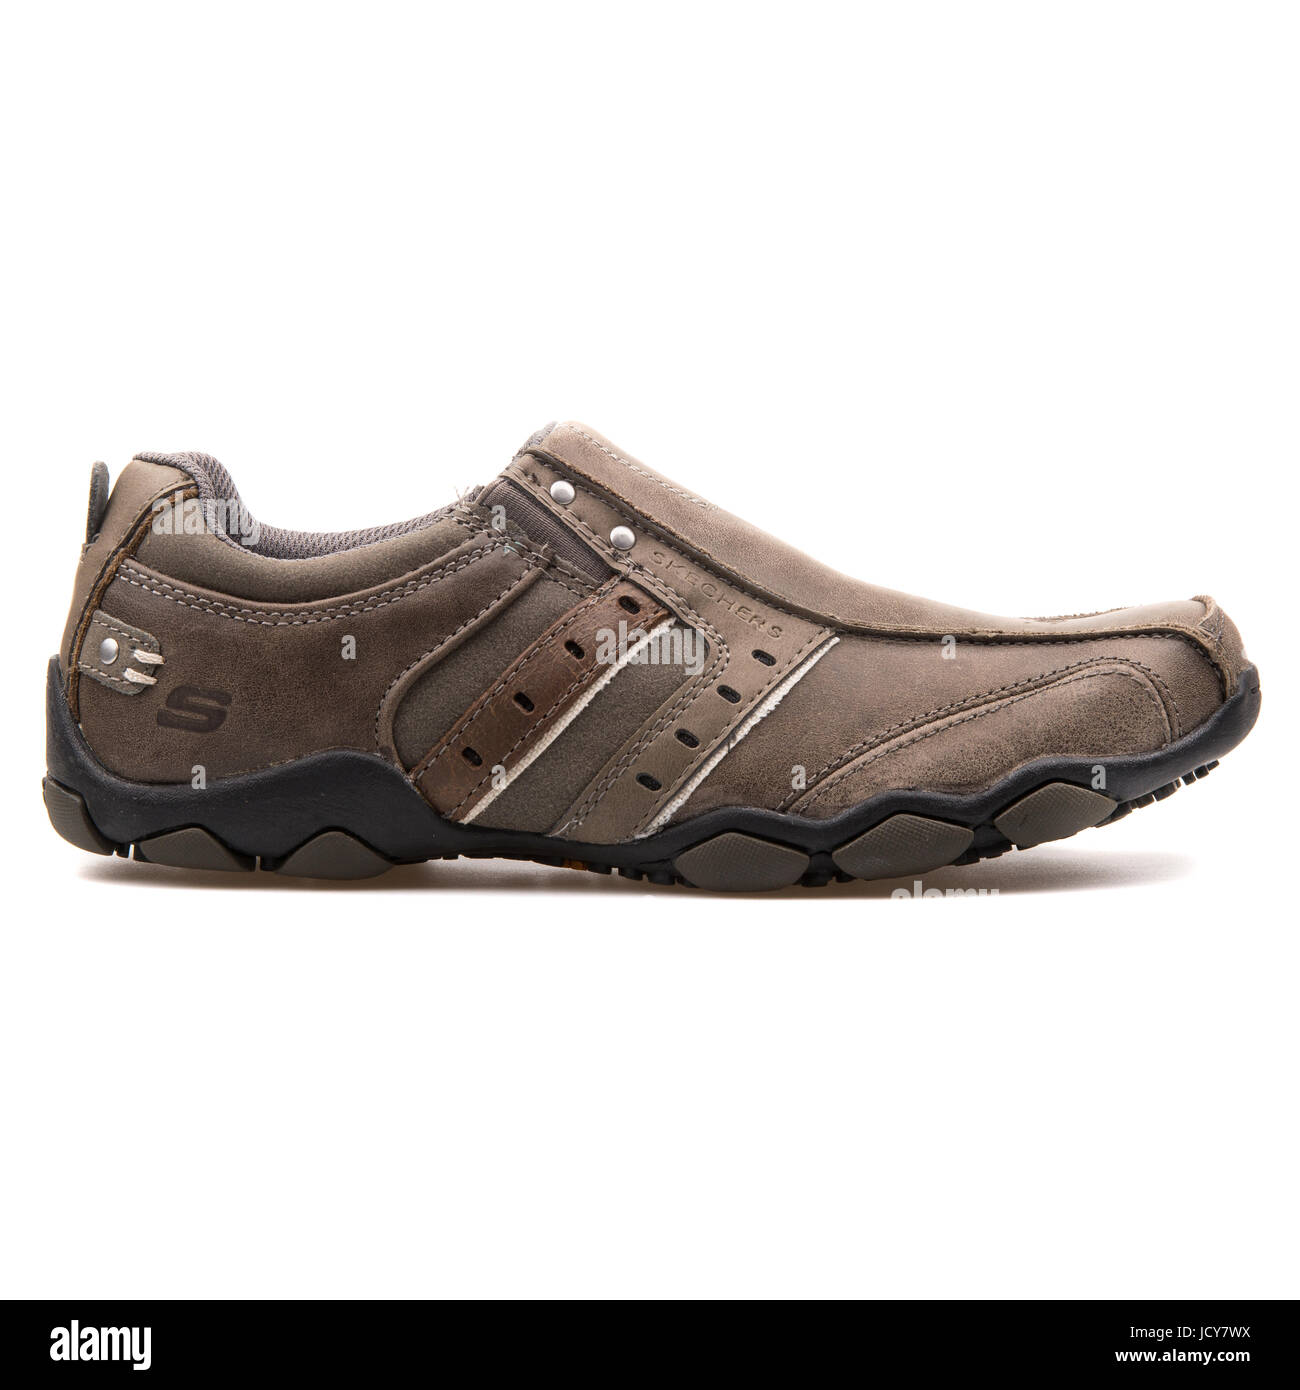 Skechers Diameter Men's Leather Shoes - 61779-CHAR Stock Photo - Alamy